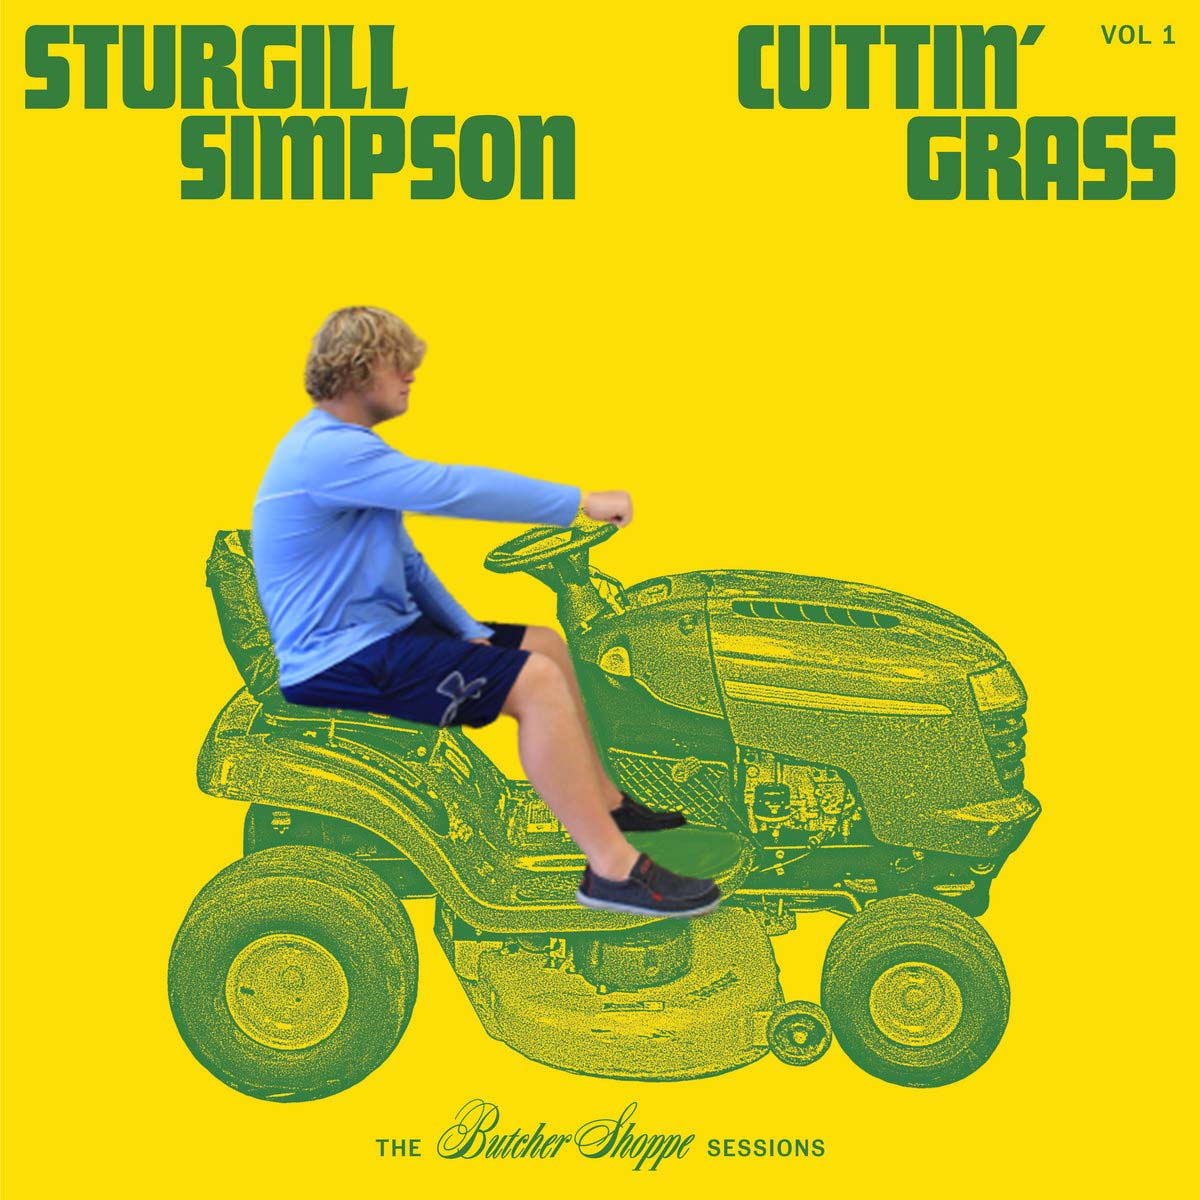 Cuttin Grass with Sturgill Simpson & John Hurst